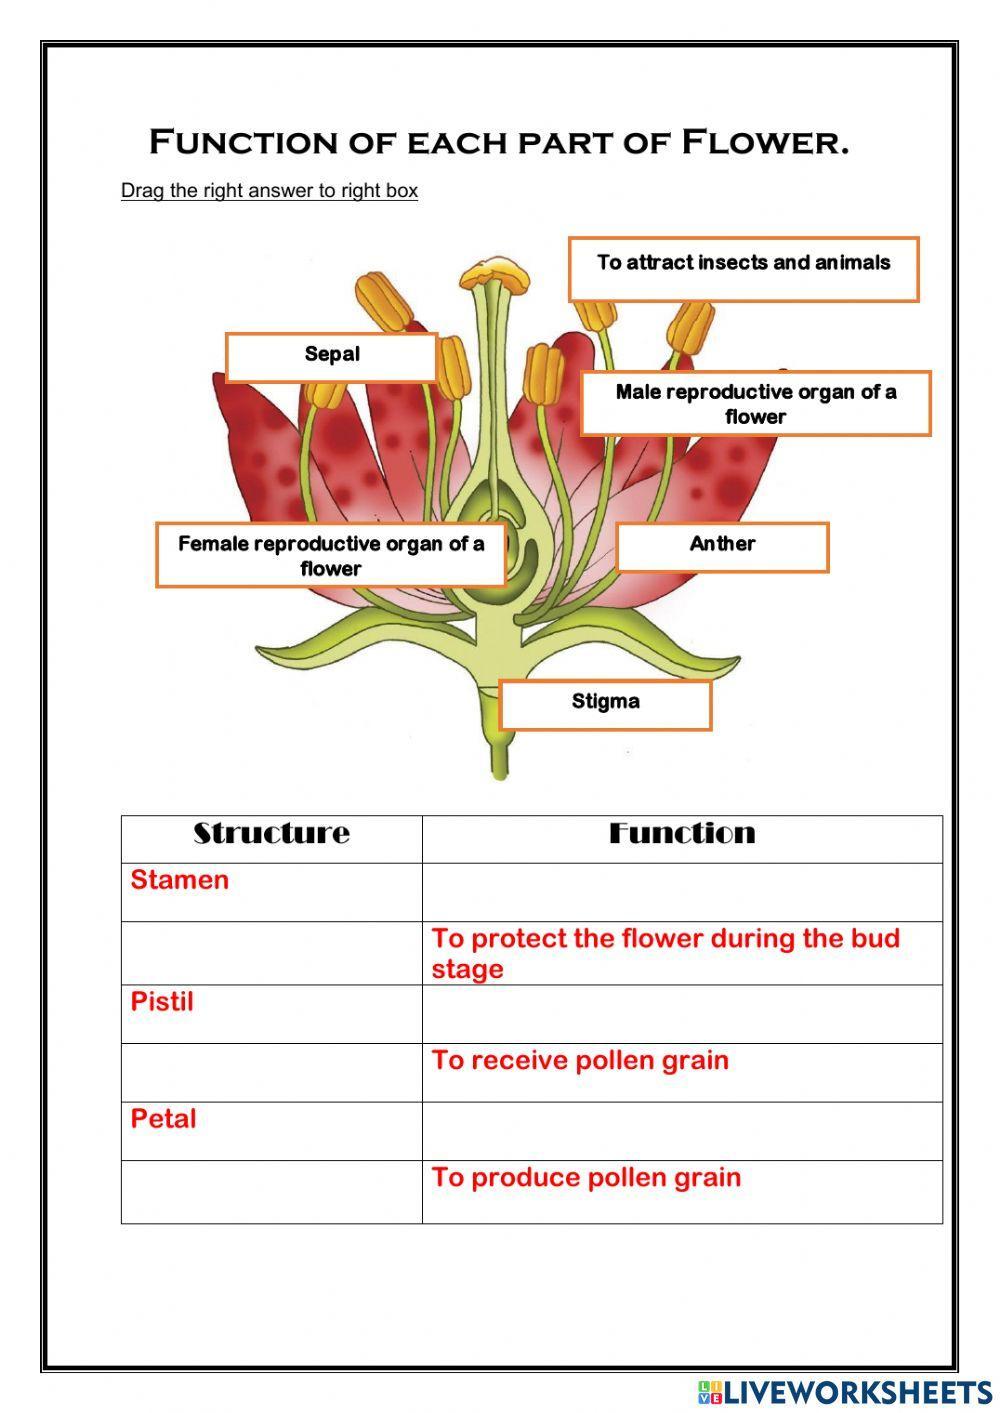 Function of Flower